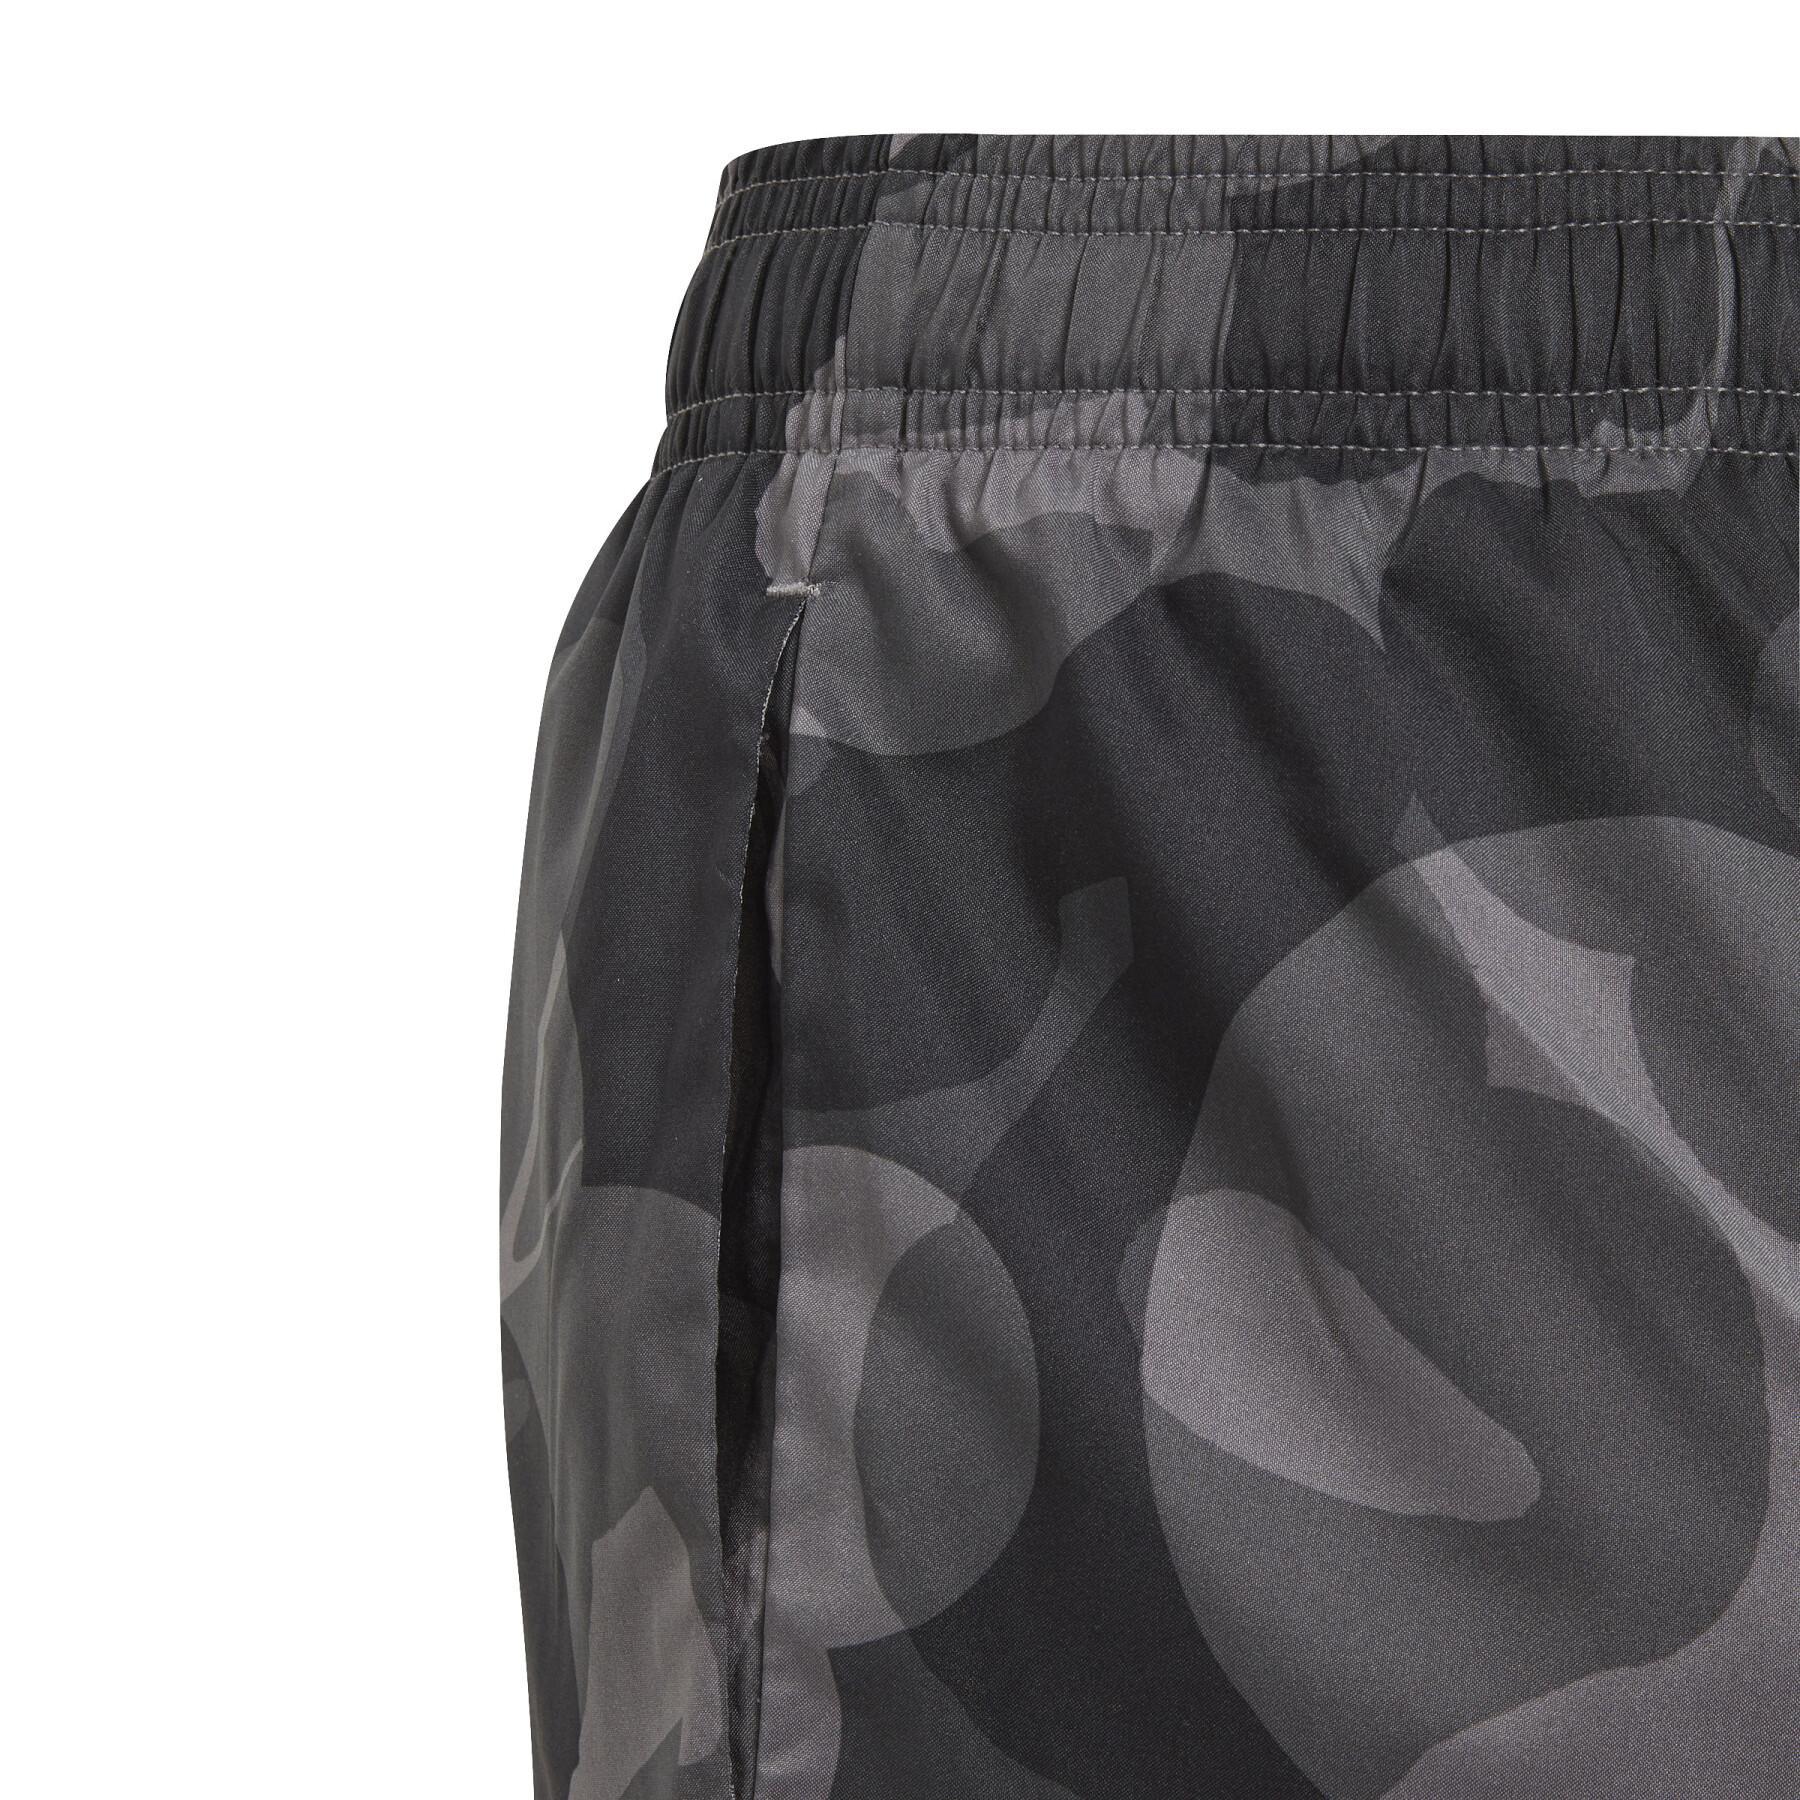 Girl's shorts adidas Essentials Aeroready Seasonal Print